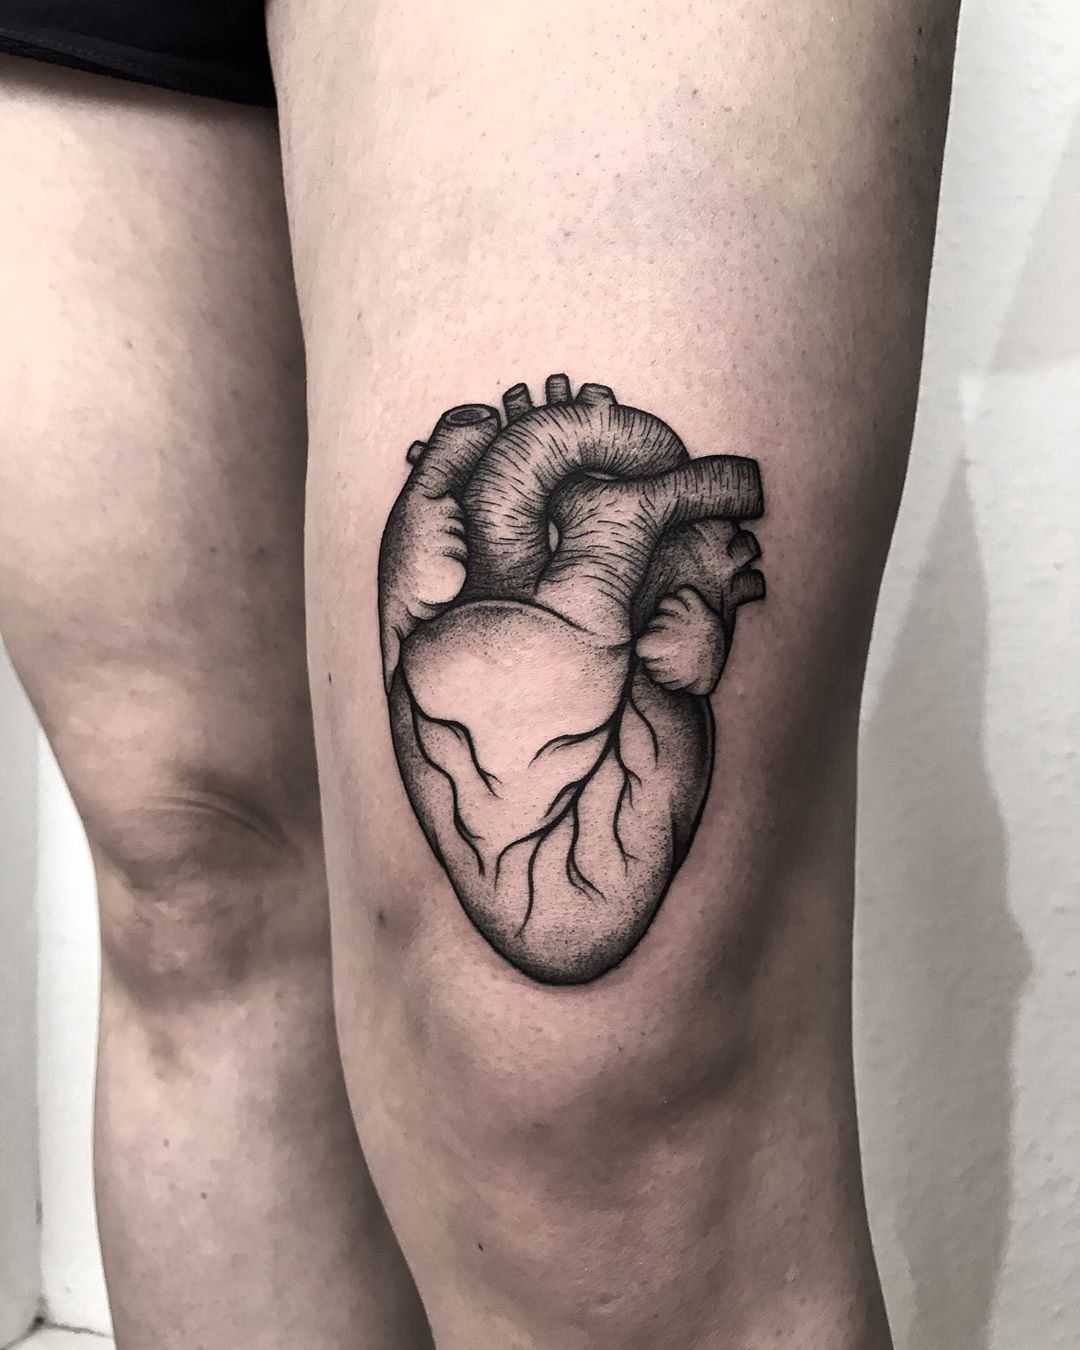 Anatomical heart by tattooist Spence @zz tattoo